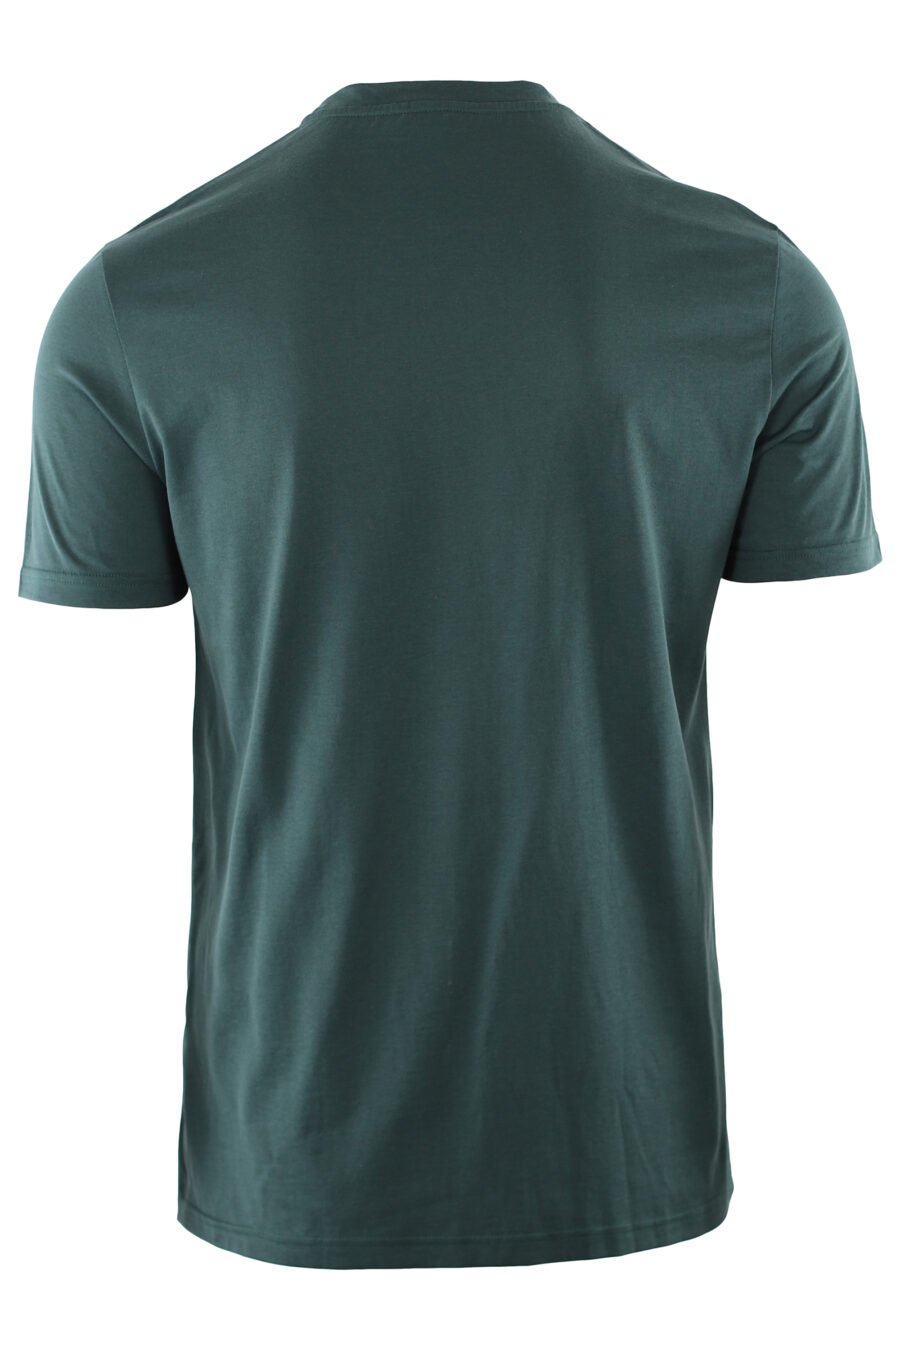 Dunkelgrünes T-Shirt mit weißem gesticktem Logo - IMG 7406